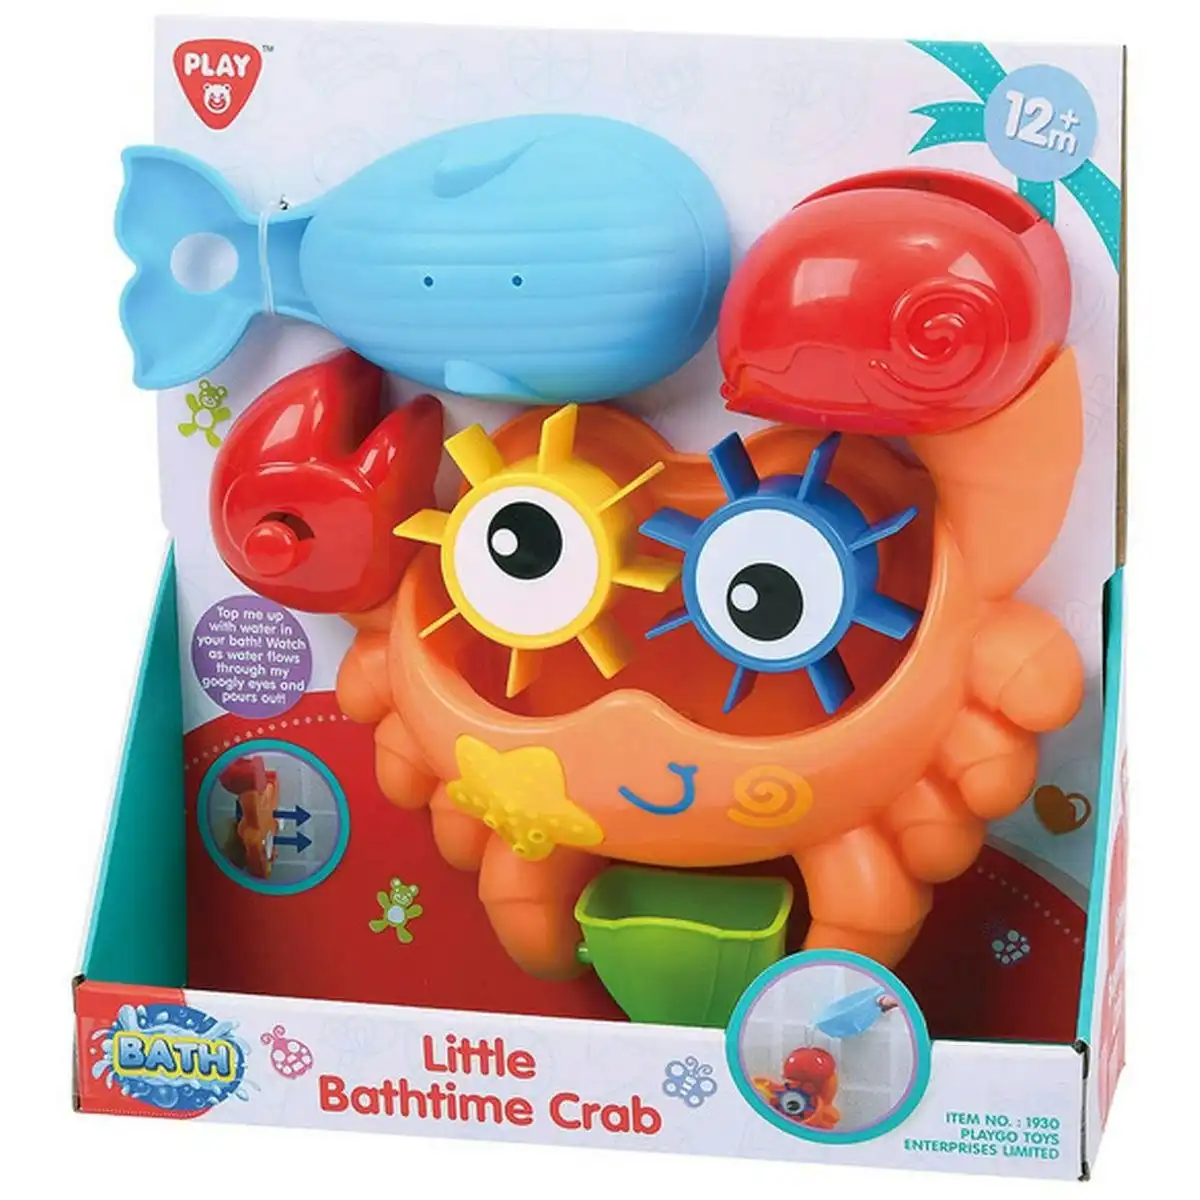 Little Bathtime Crab  Playgo Toys Ent. Ltd